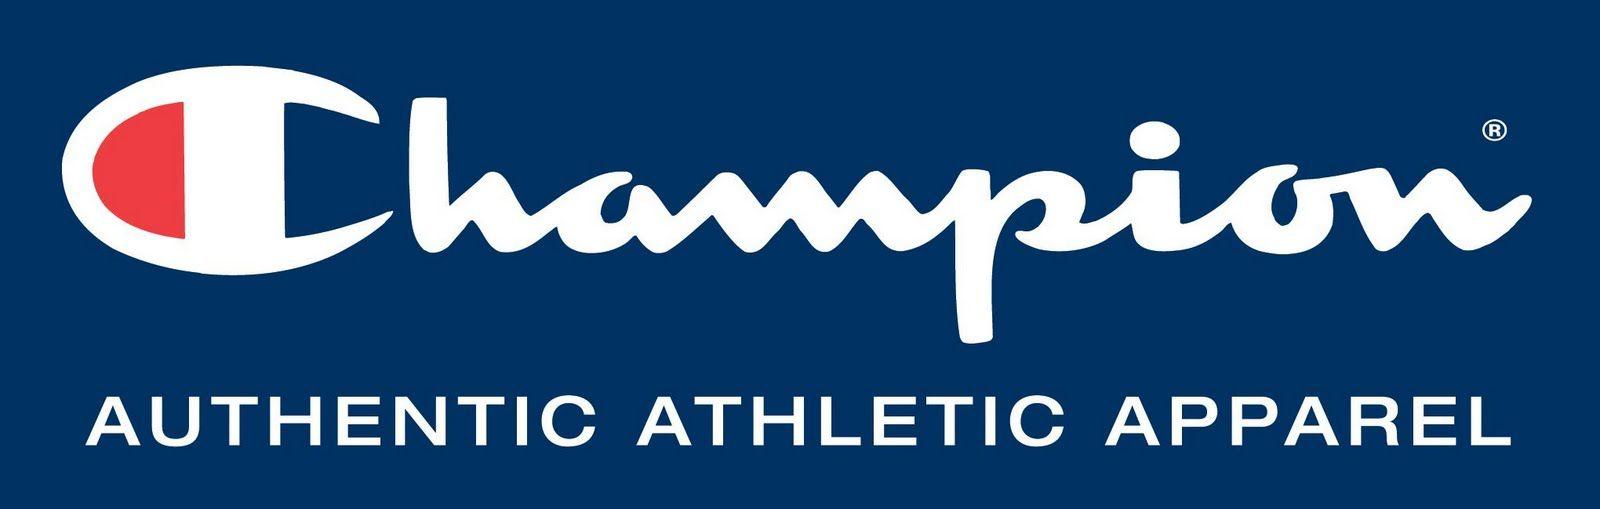 Champion Store Logo - Champion | My Style | Pinterest | Logos, Champion logo and Champion